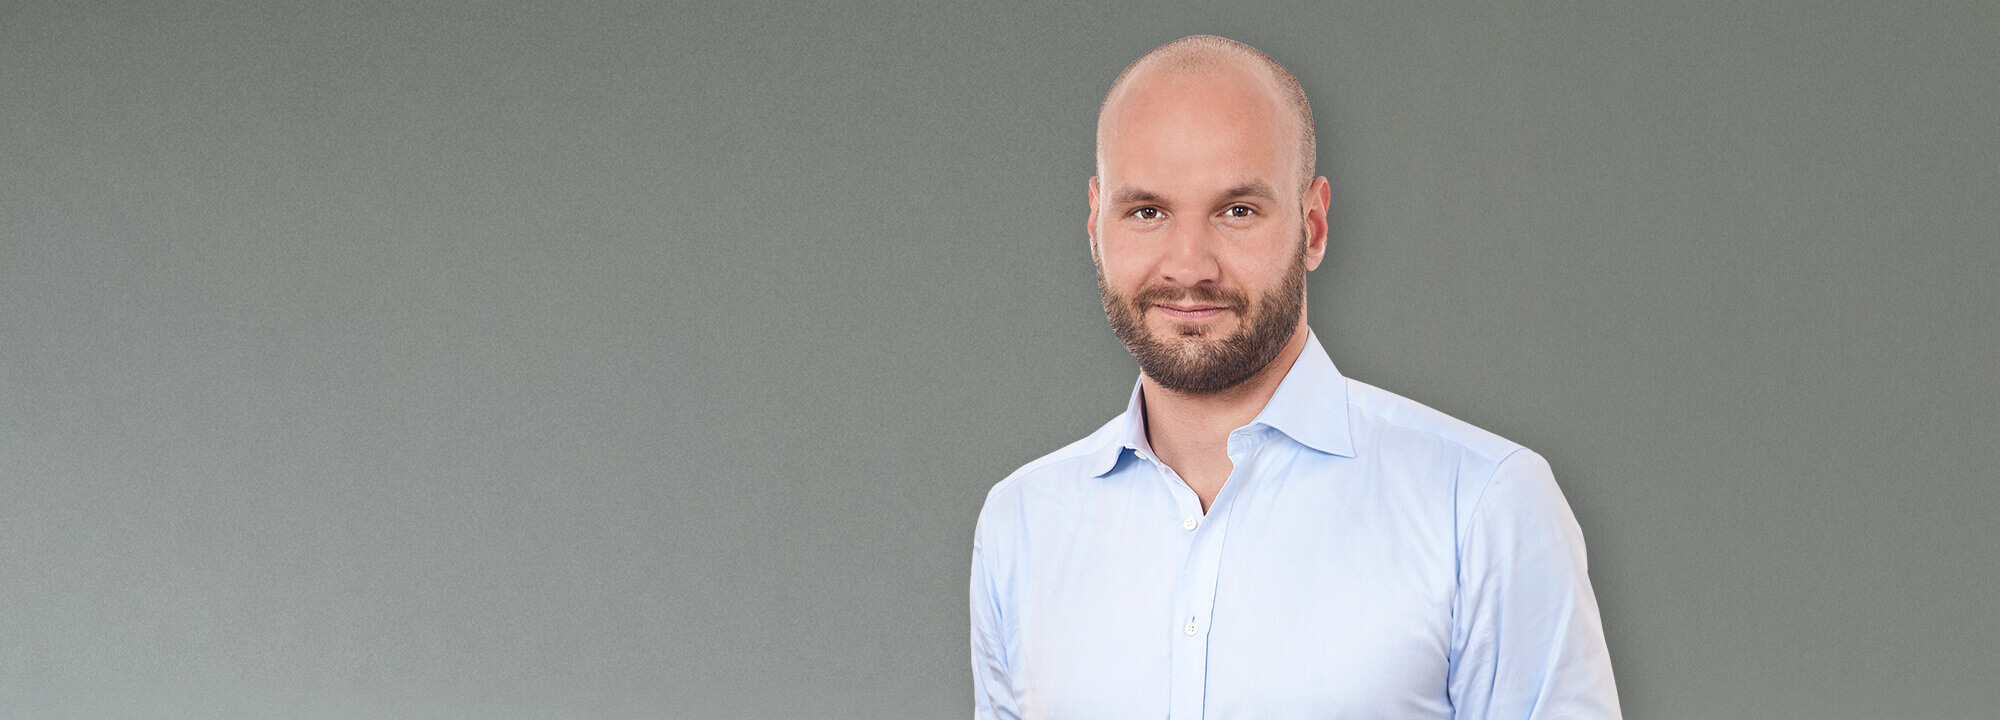 Start-up-Investor Christian Miele im Alumni-Interview